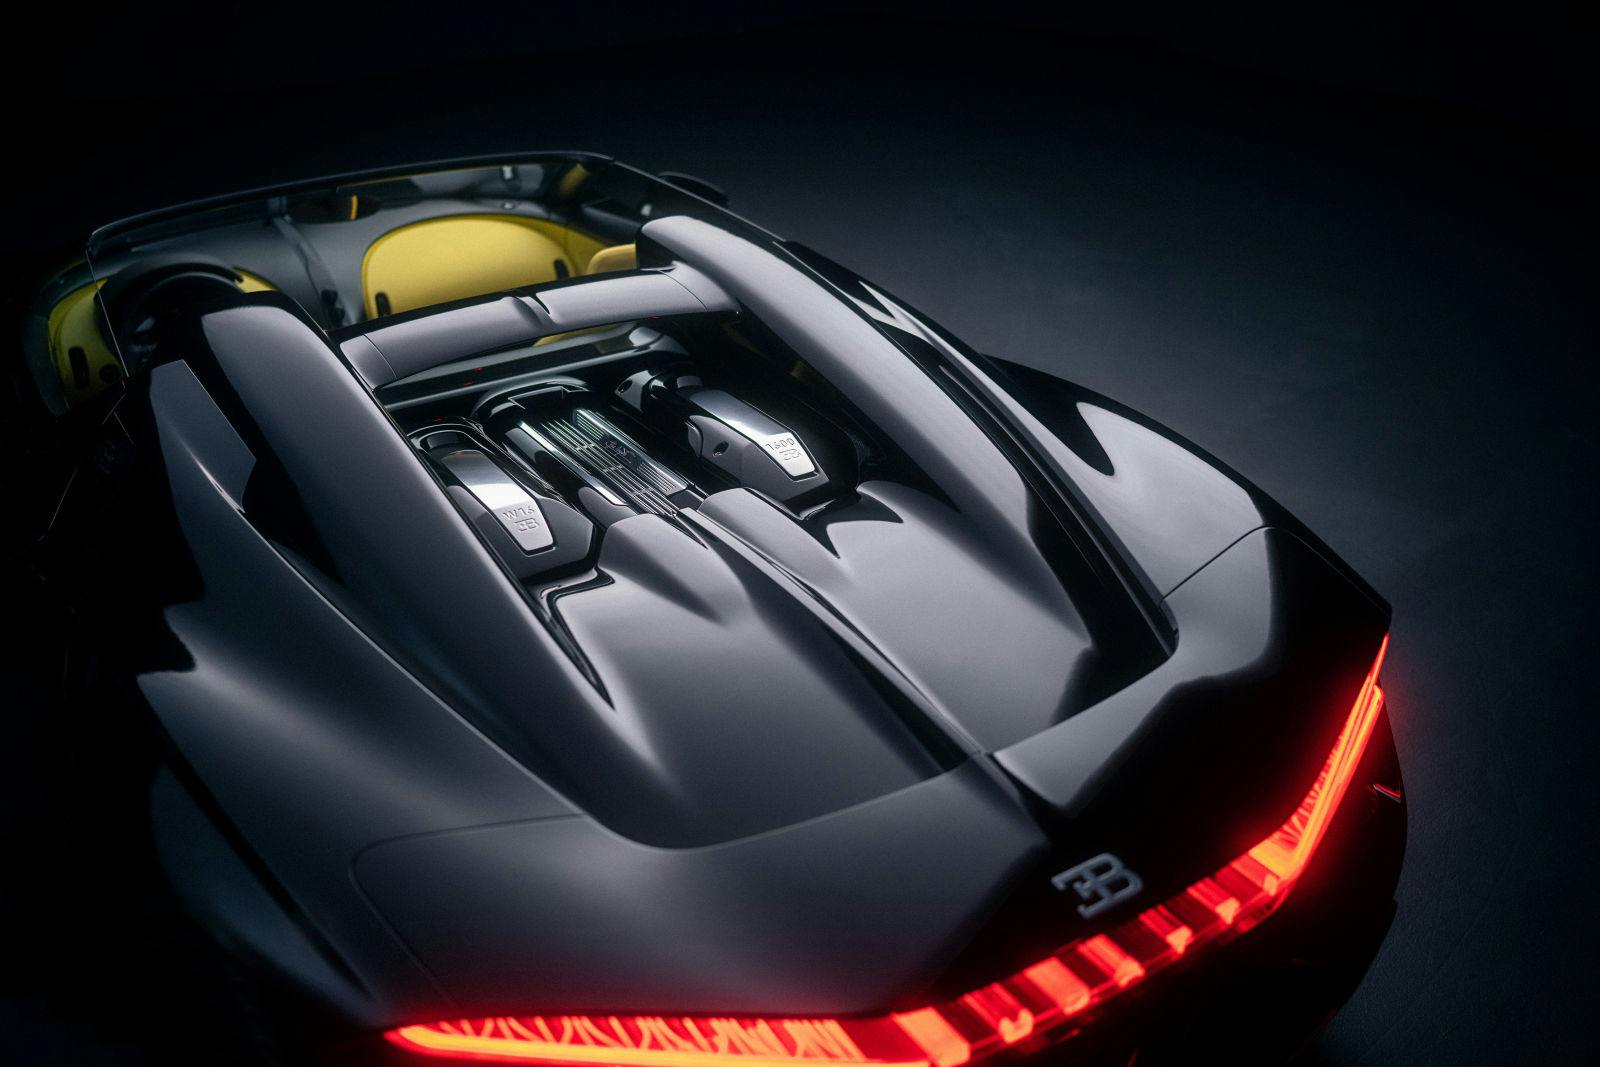 The Bugatti W16 Mistral's engine producing 1600 PS.